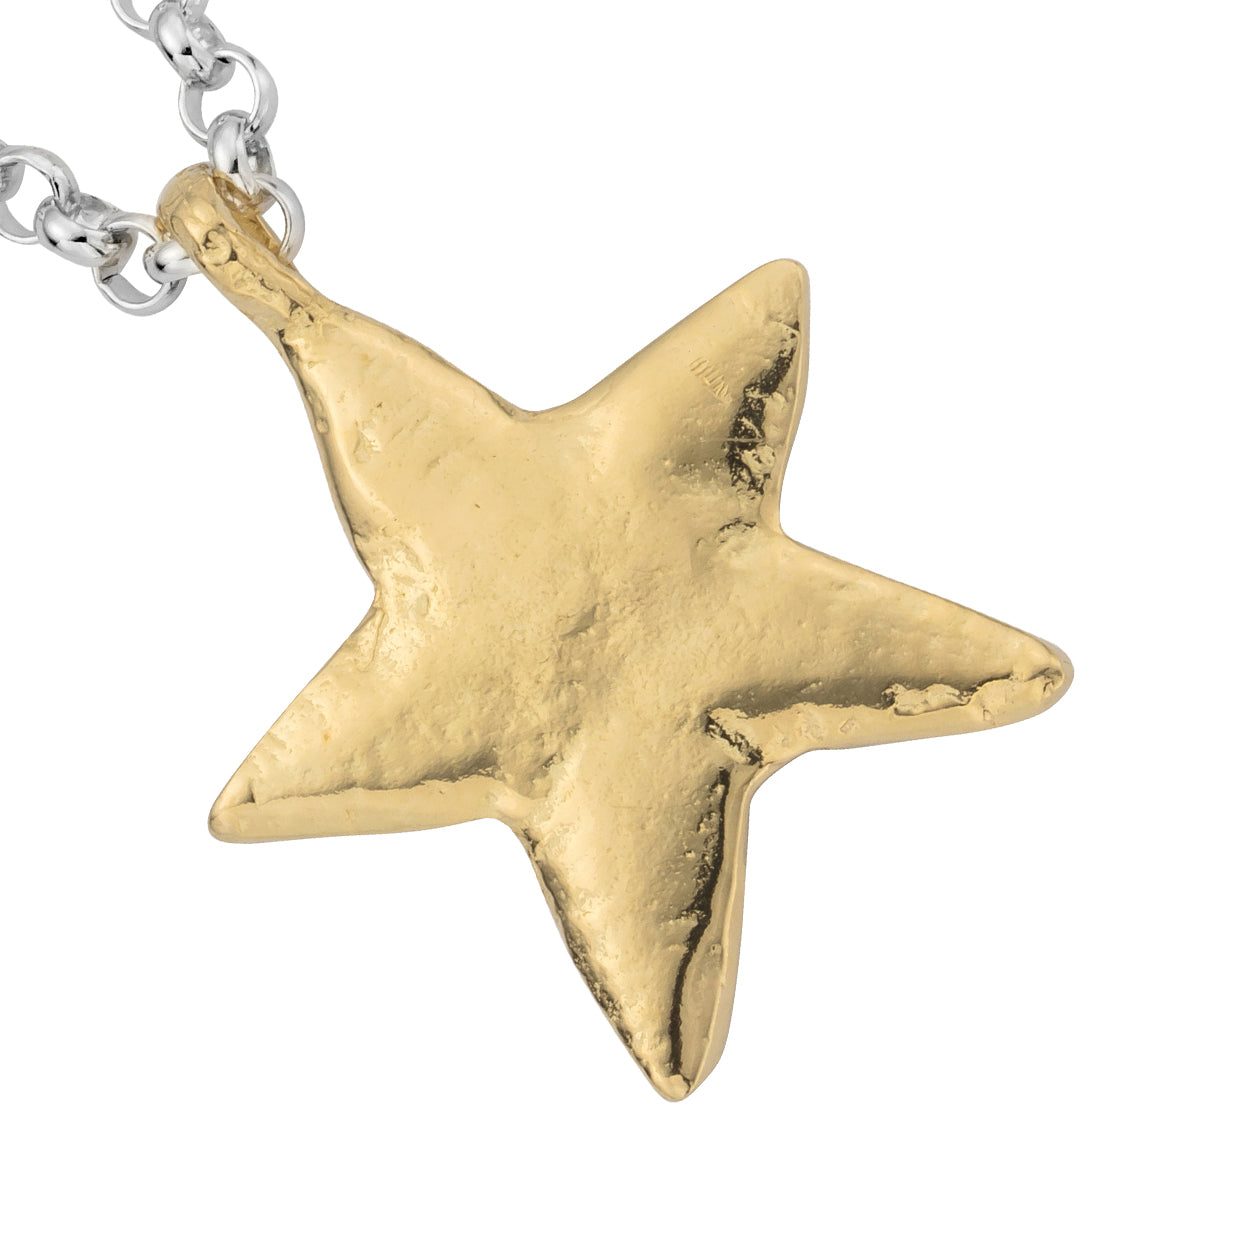 Silver & Gold Maxi Star Necklace